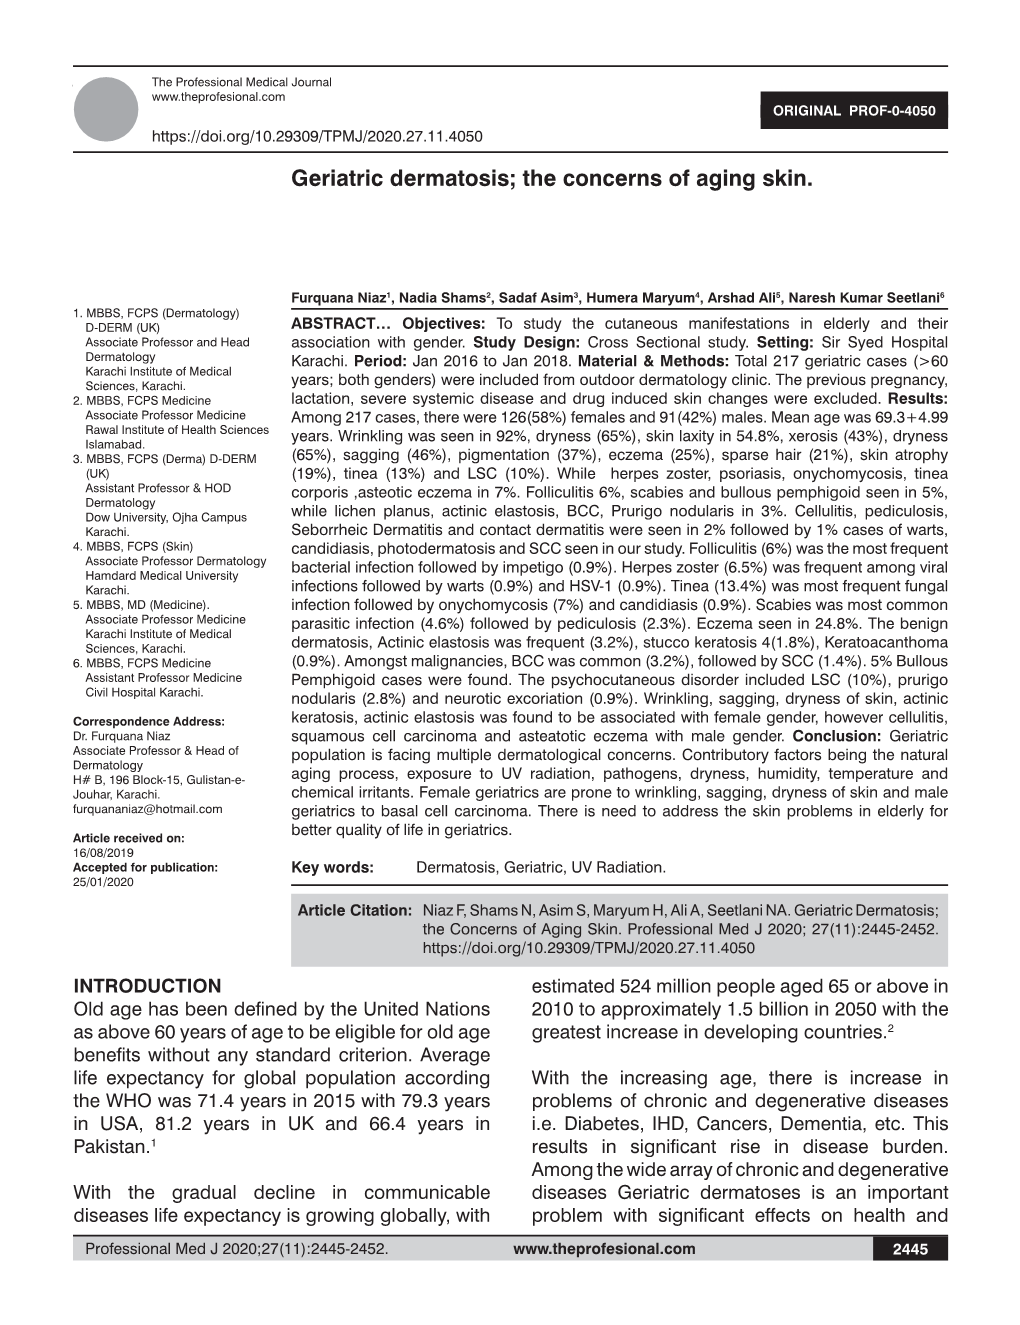 GERIATRIC DERMATOSIS the Professional Medical Journal ORIGINAL PROF-0-4050